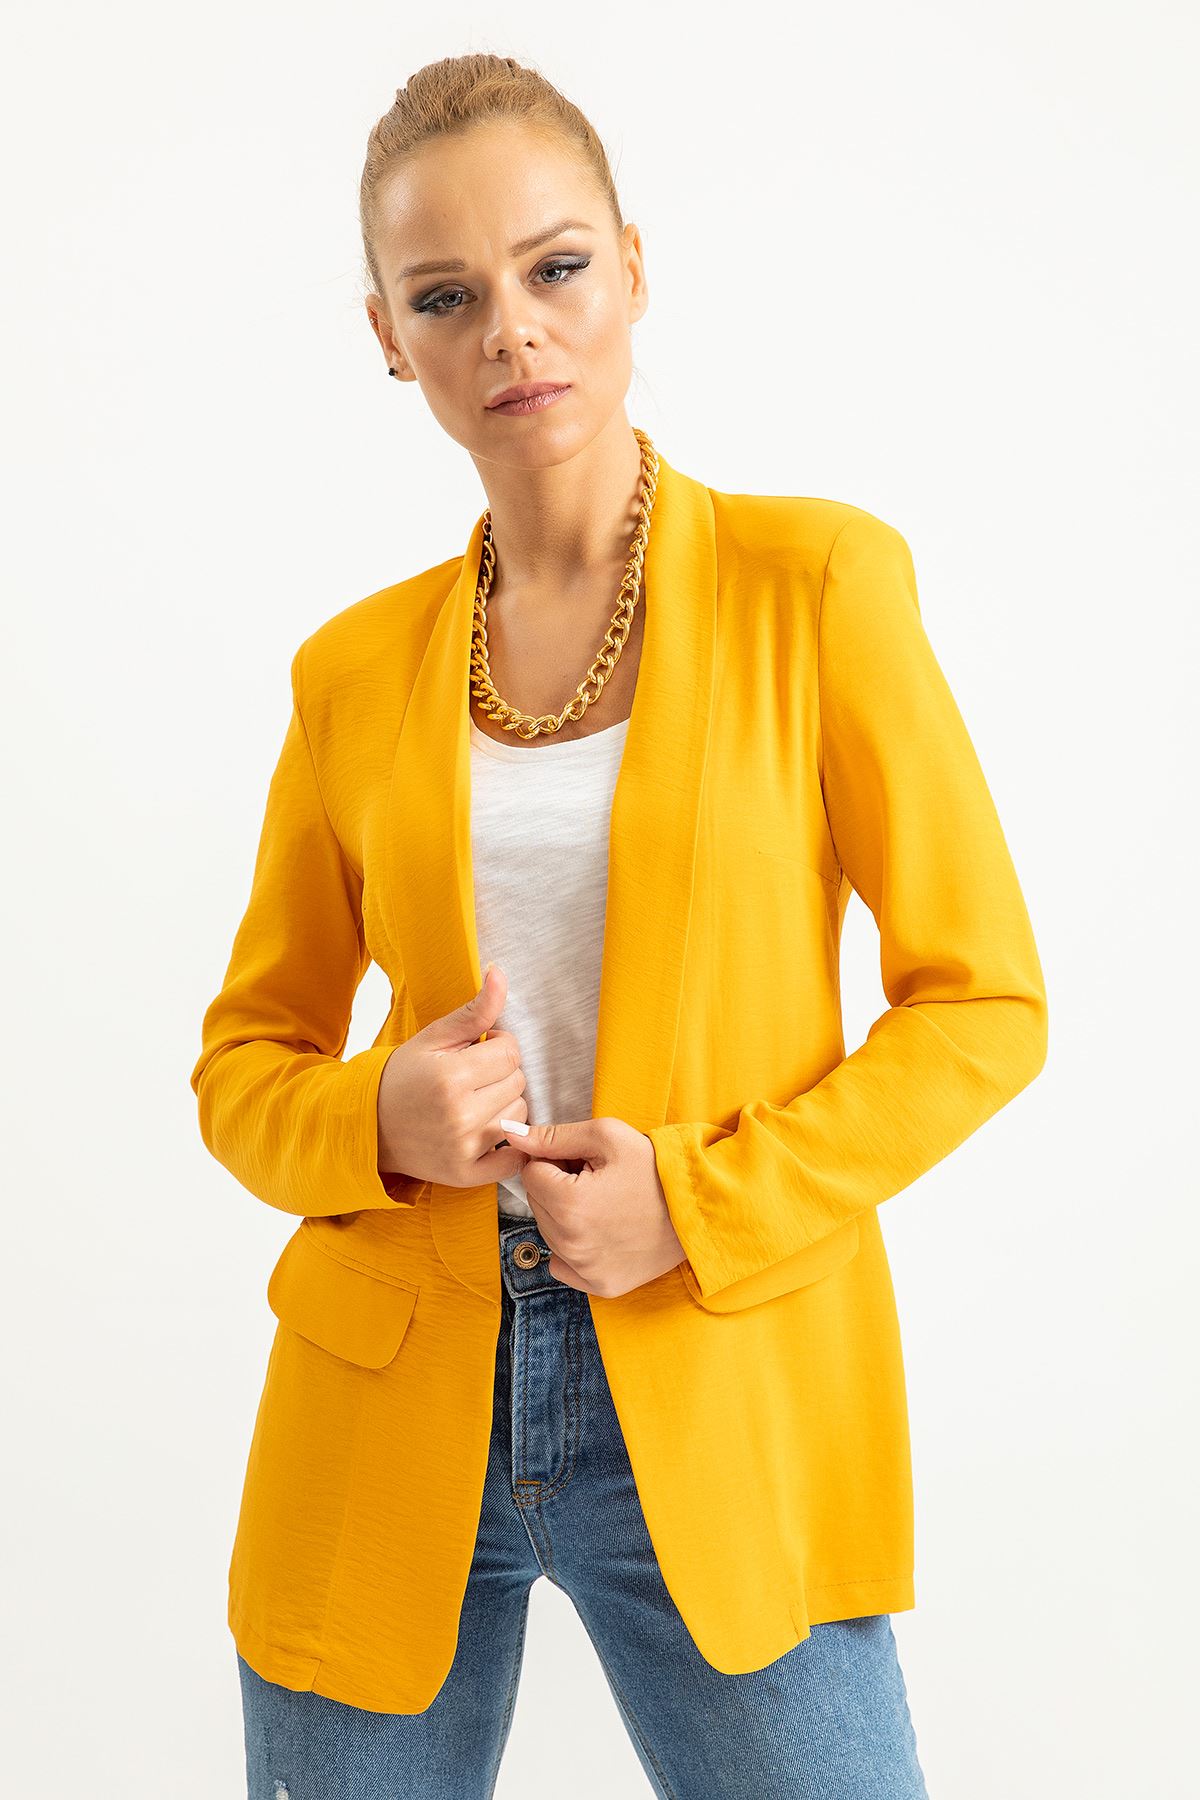 Aerobin Fabric Wing Collar Below Hip Comfy Blazer Women Jacket - Mustard